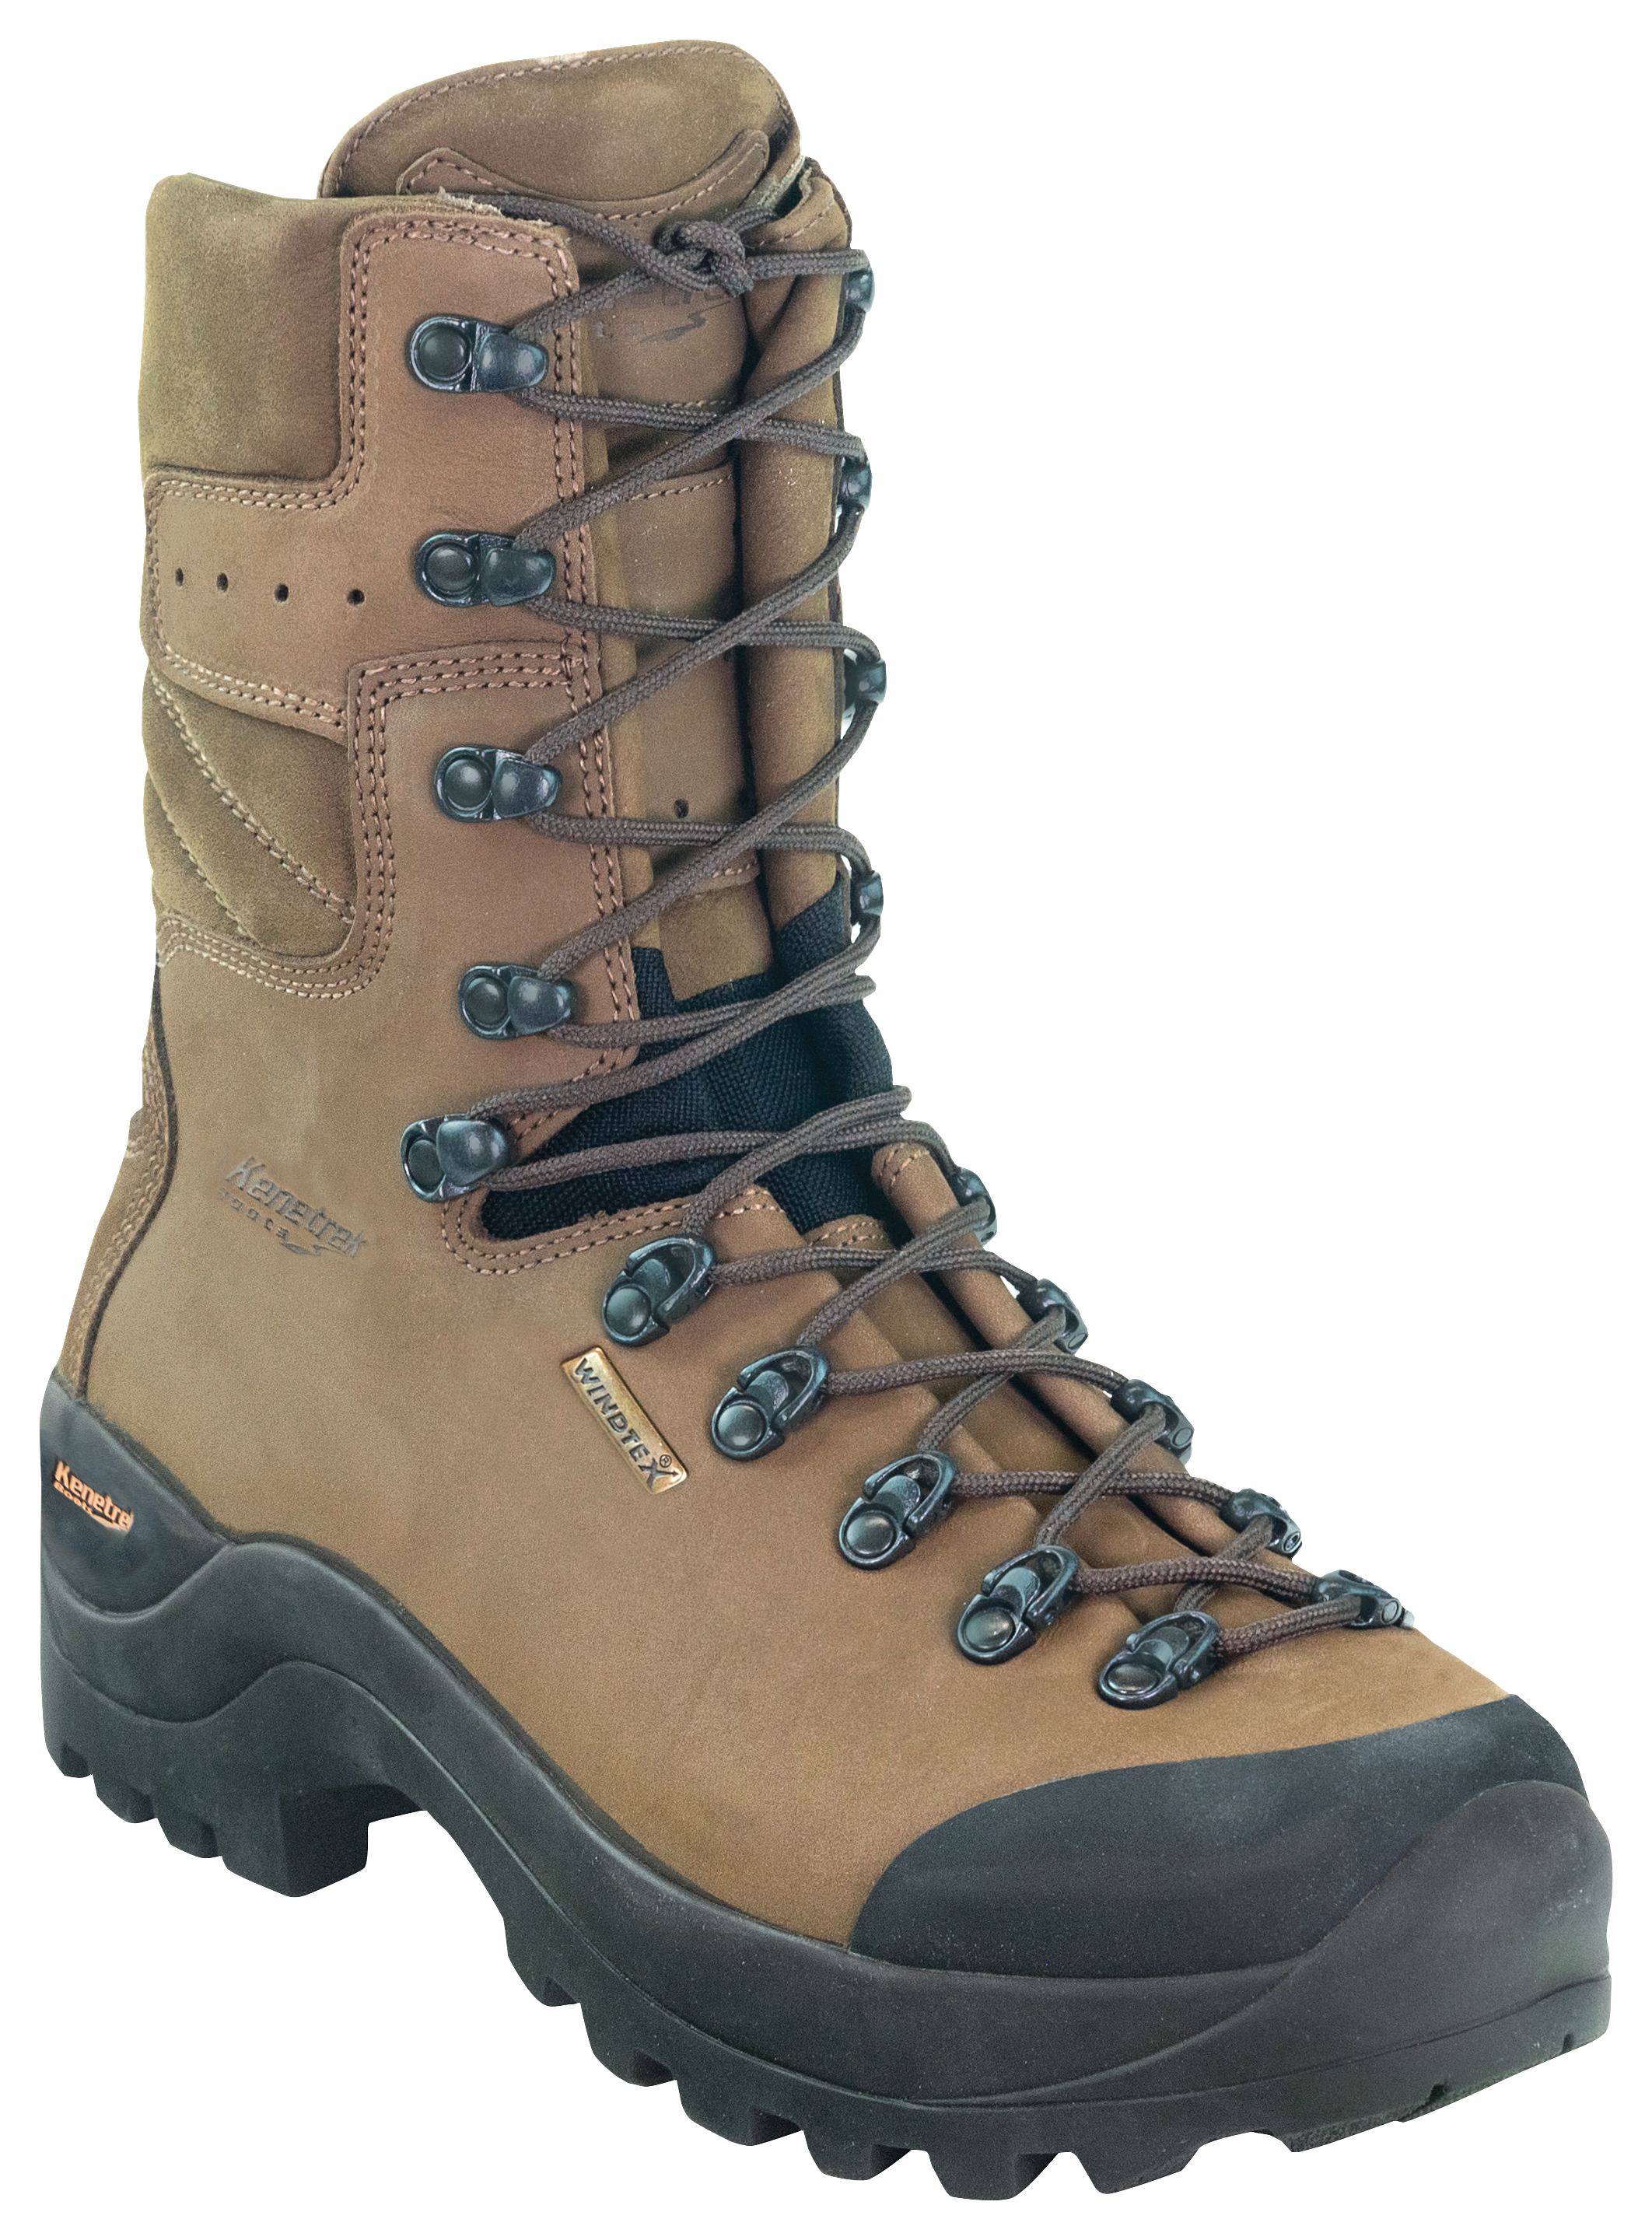 Kenetrek Mountain Guide Waterproof Hunting Boots for Men - Brown - 10M